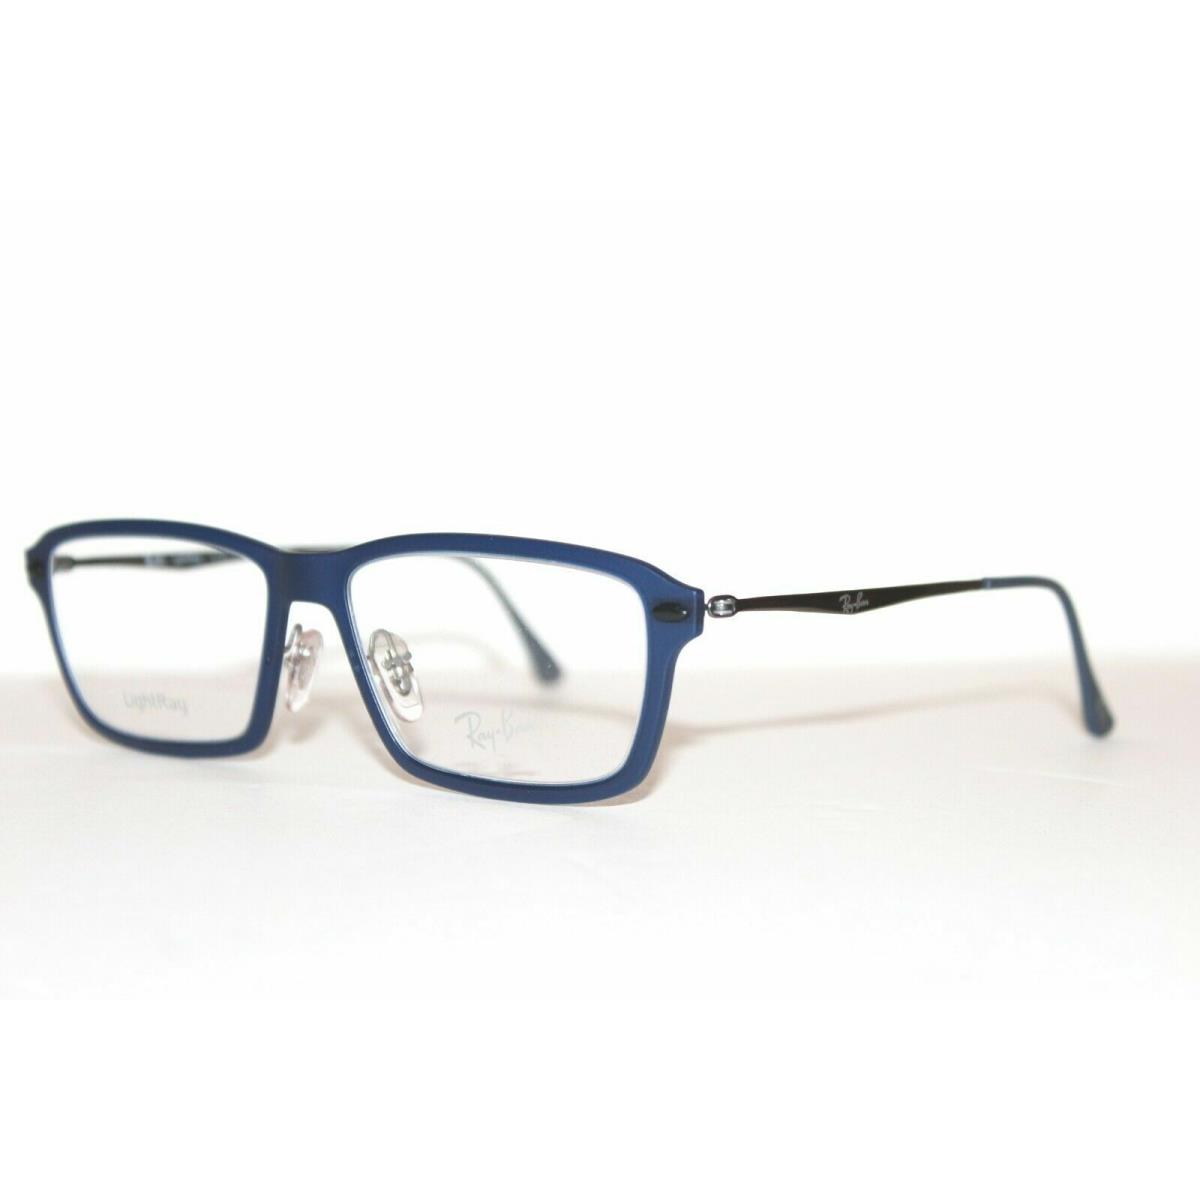 Ray-ban RB 7038 5451 Blue Eyeglasses Frame RX RB7038 55-16